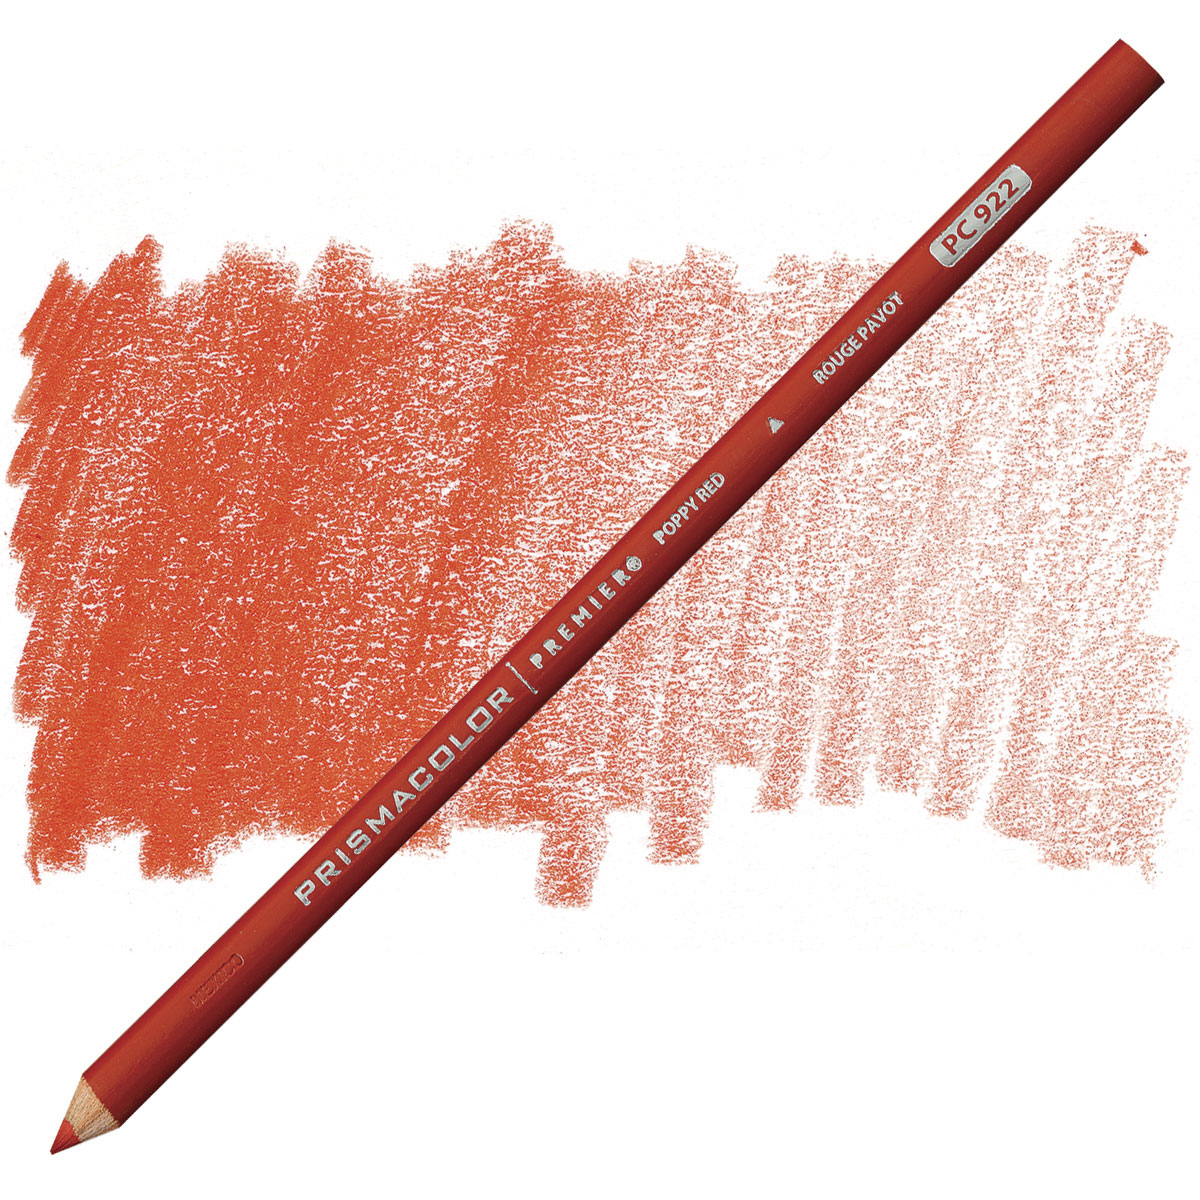 Genuine USA Prisma Premier Colored Pencils Prismacolor Drawing Material Oil  Colors Professional Sketch Art,72 132 150 Colors